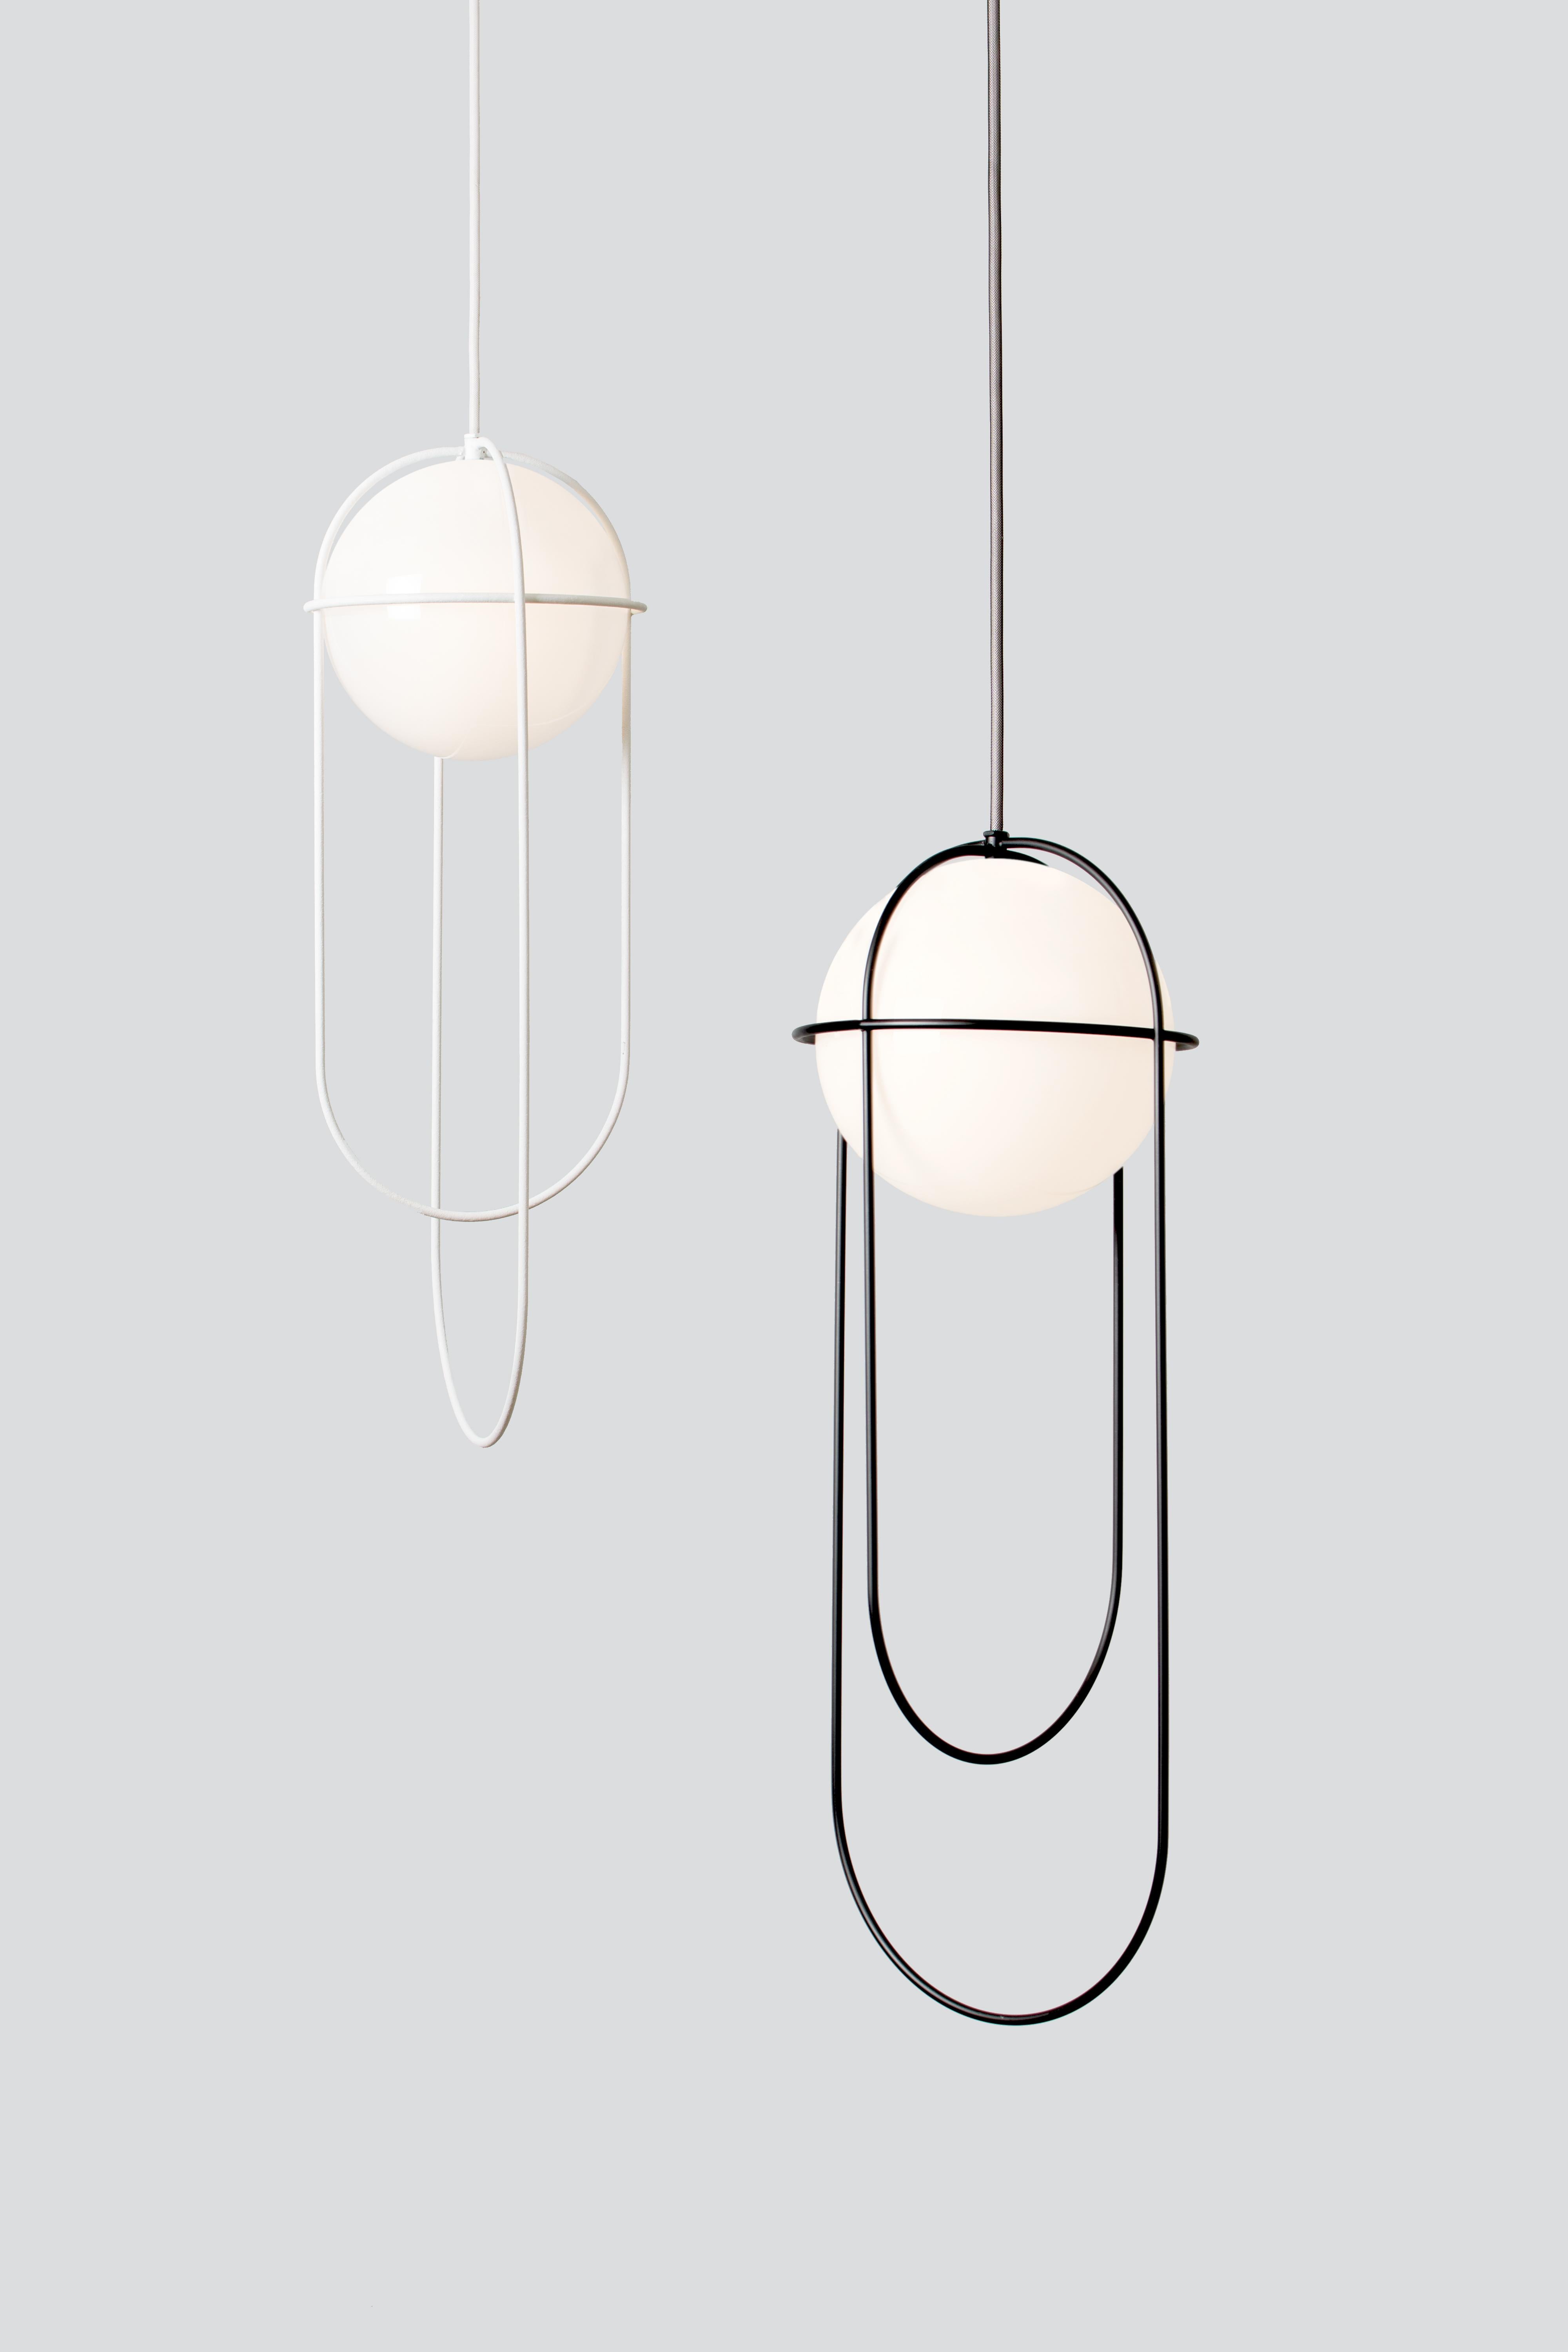 Hängeleuchte Orbit 2015
Design: Lukas Peet, Herausgeber: AND Light

MATERIALIEN
- Stahldraht
- Geätzter Glasglobus

Abmessungen
68,5 x 25cm / 27 